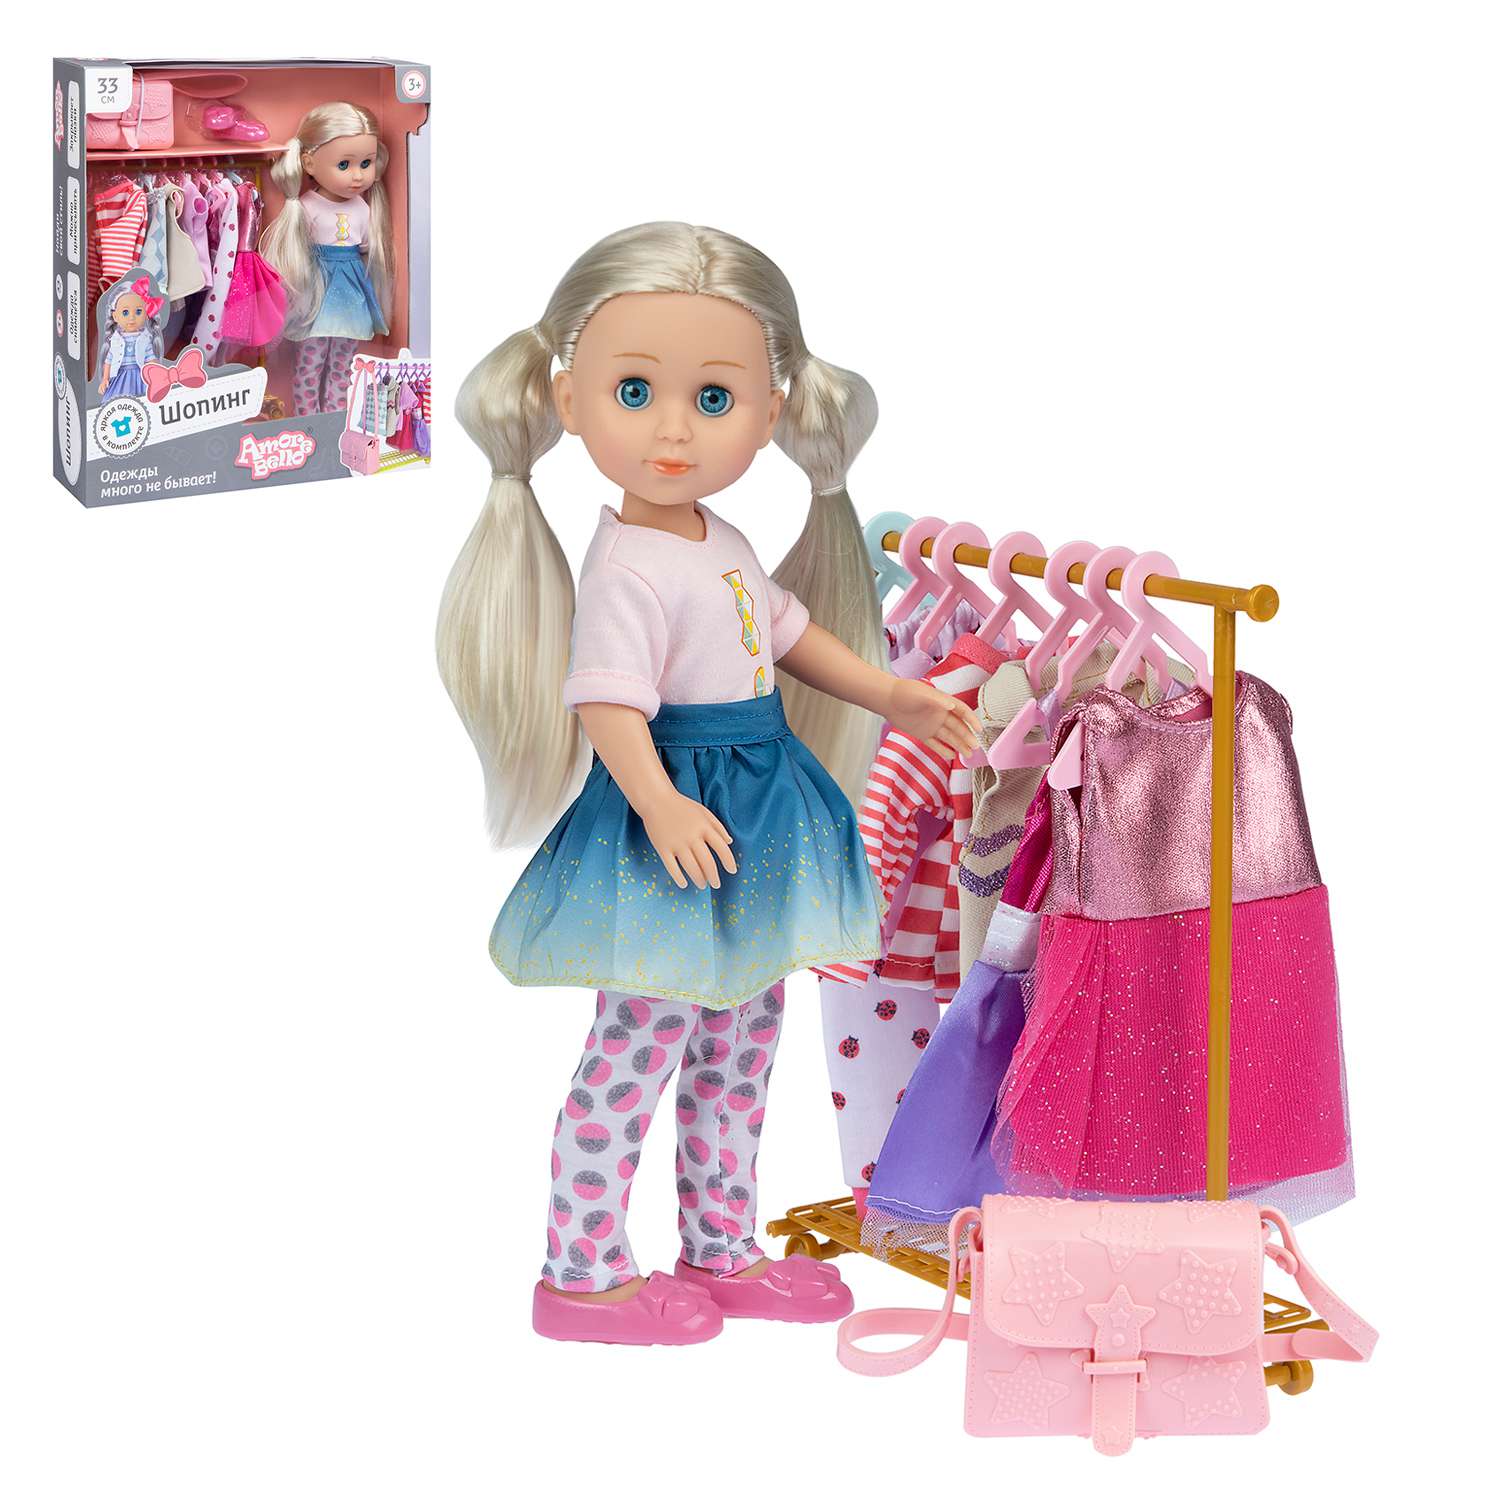 Кукла JB0211476 Шопинг с одеждой и аксессуарами ТМ Amore Bello - Омск 